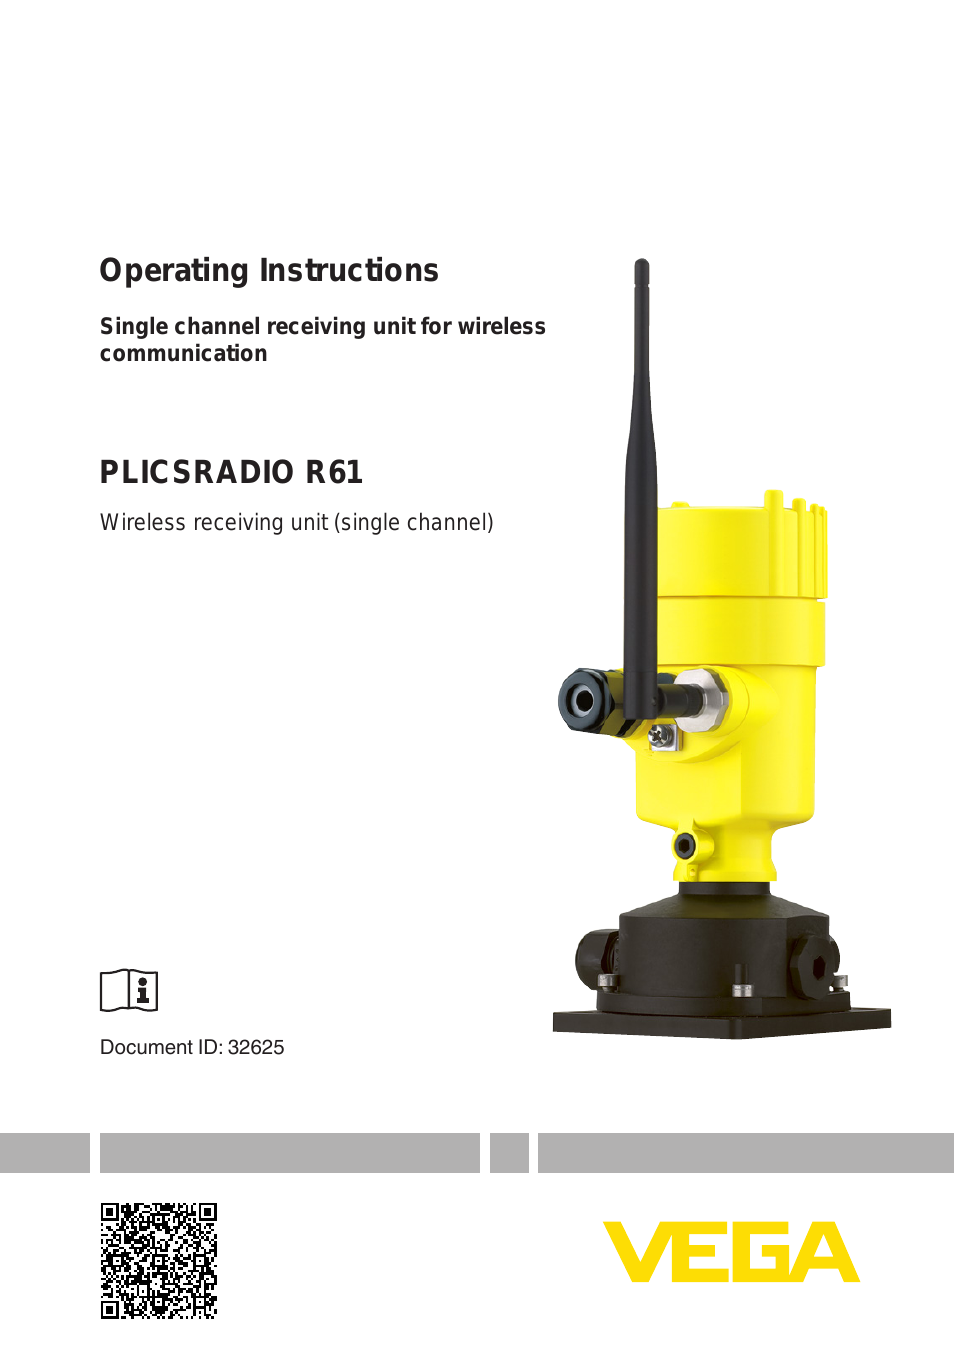 PLICSRADIO R61 Wireless receiving unit